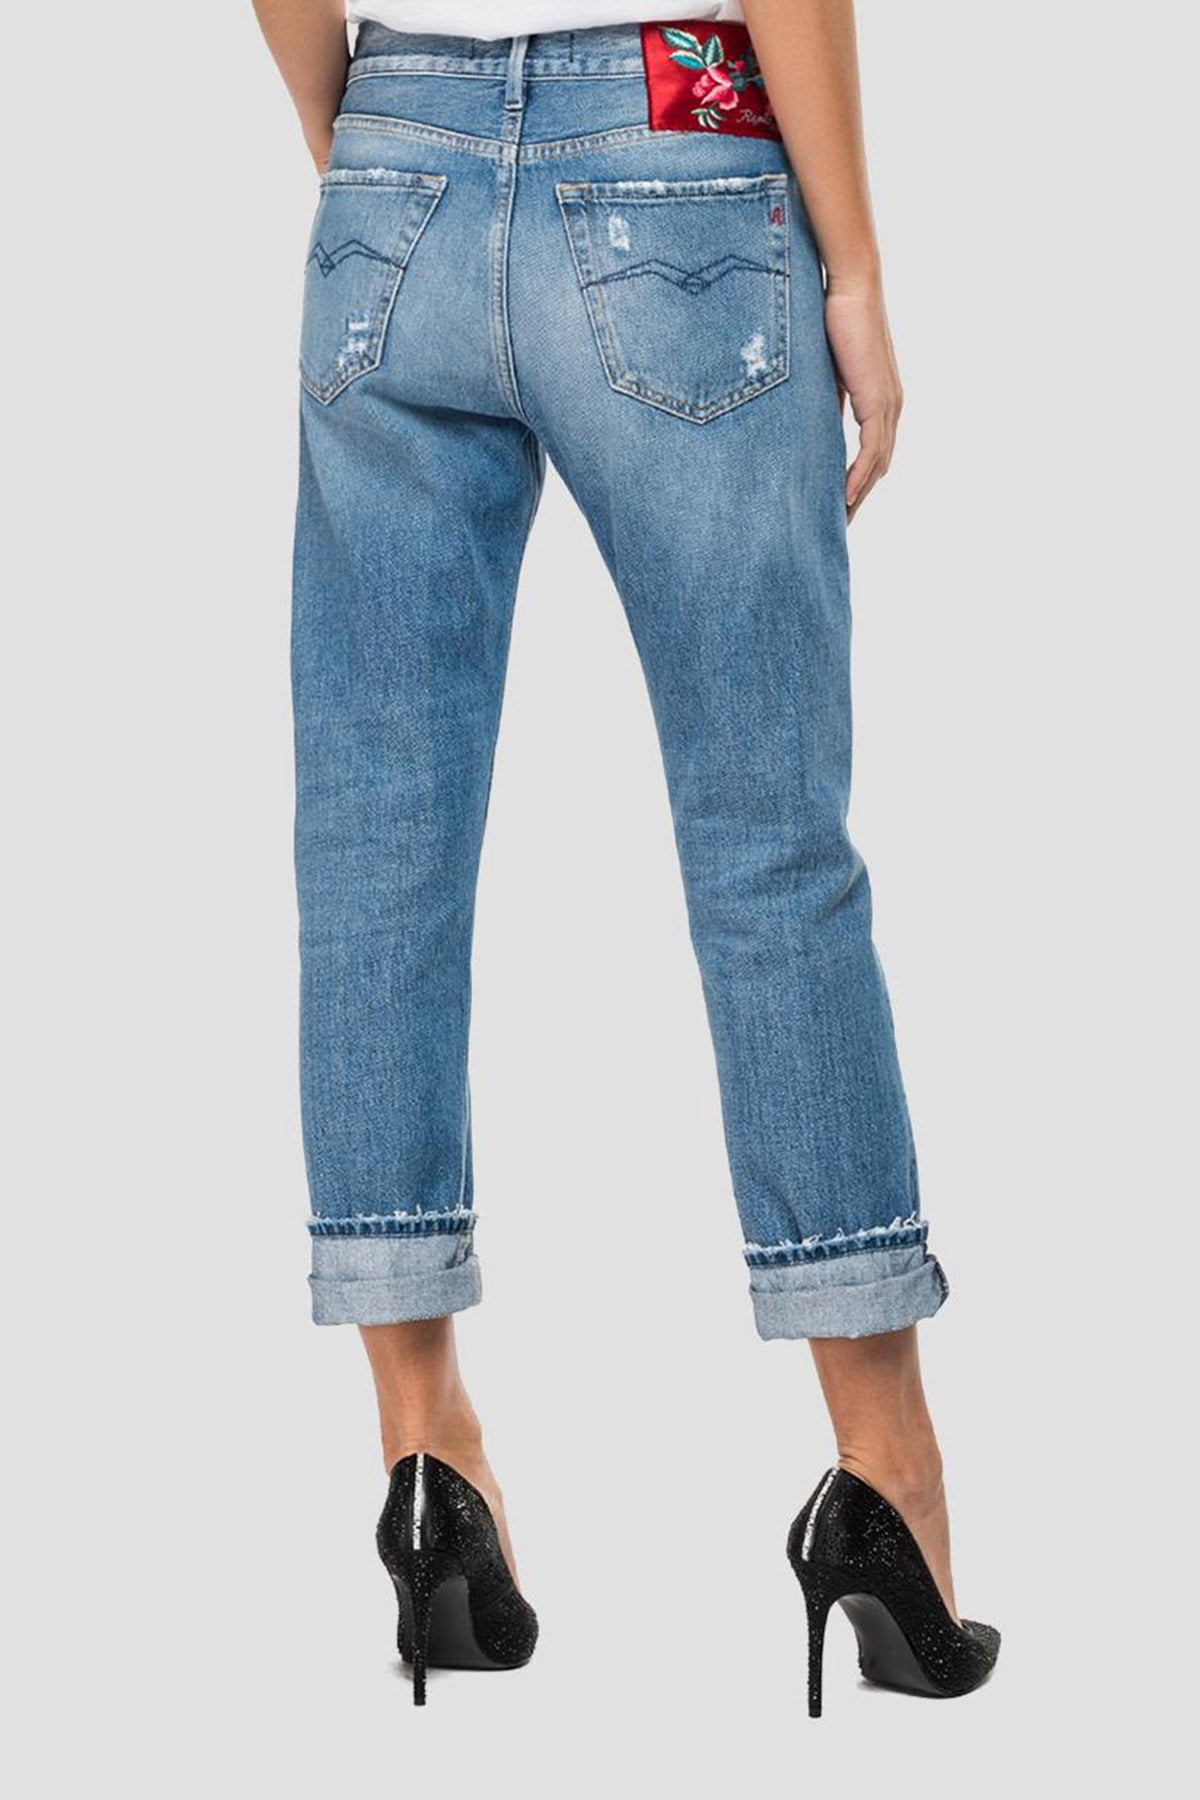 Replay Roxel Boyfriend Jeans-Libas Trendy Fashion Store